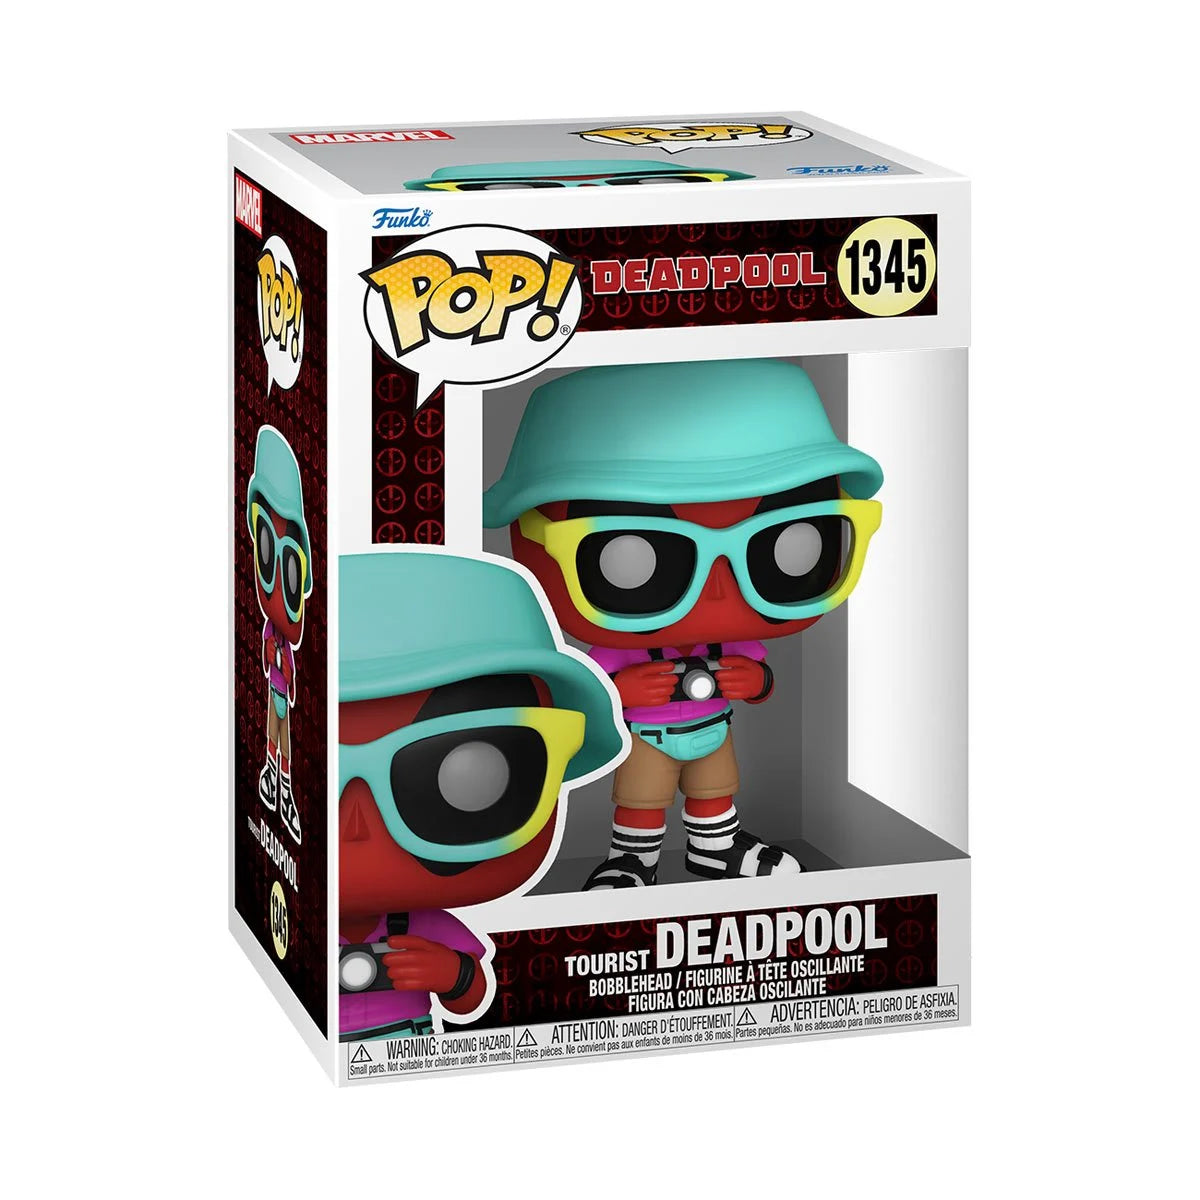 Deadpool Parody Tourist Deadpool Funko Pop!